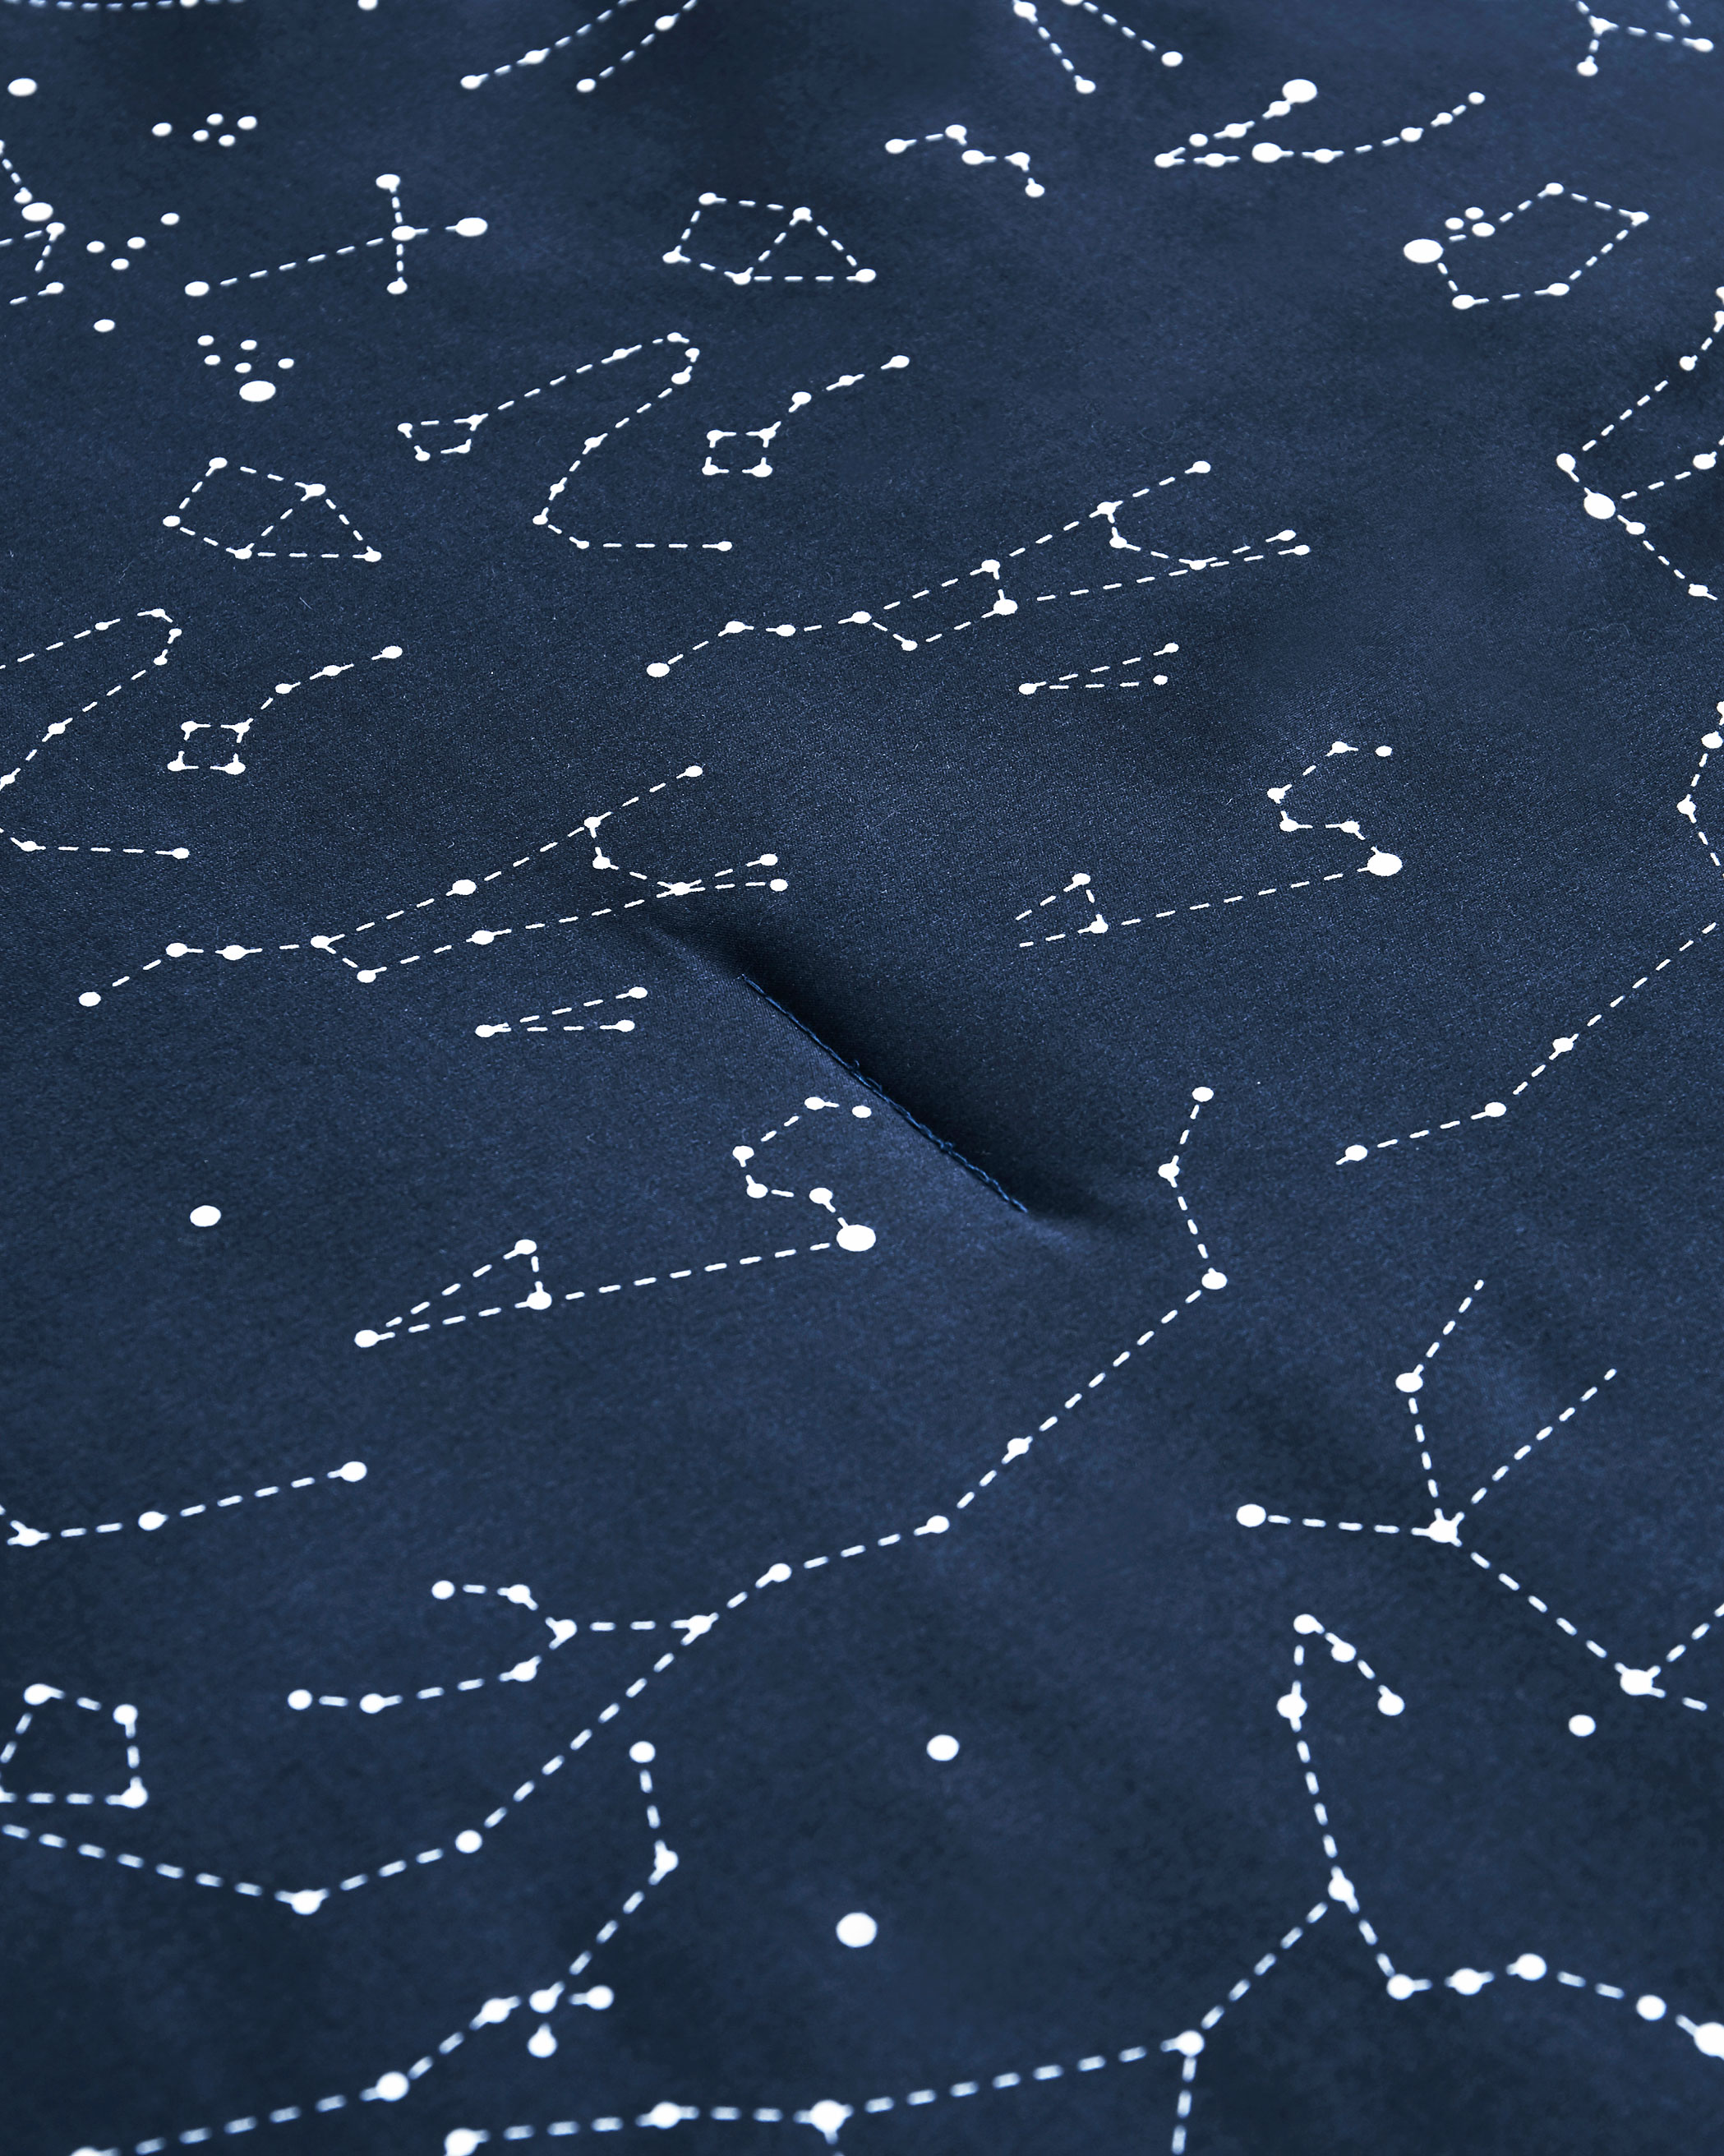 Constellation Microfiber Comforter Set